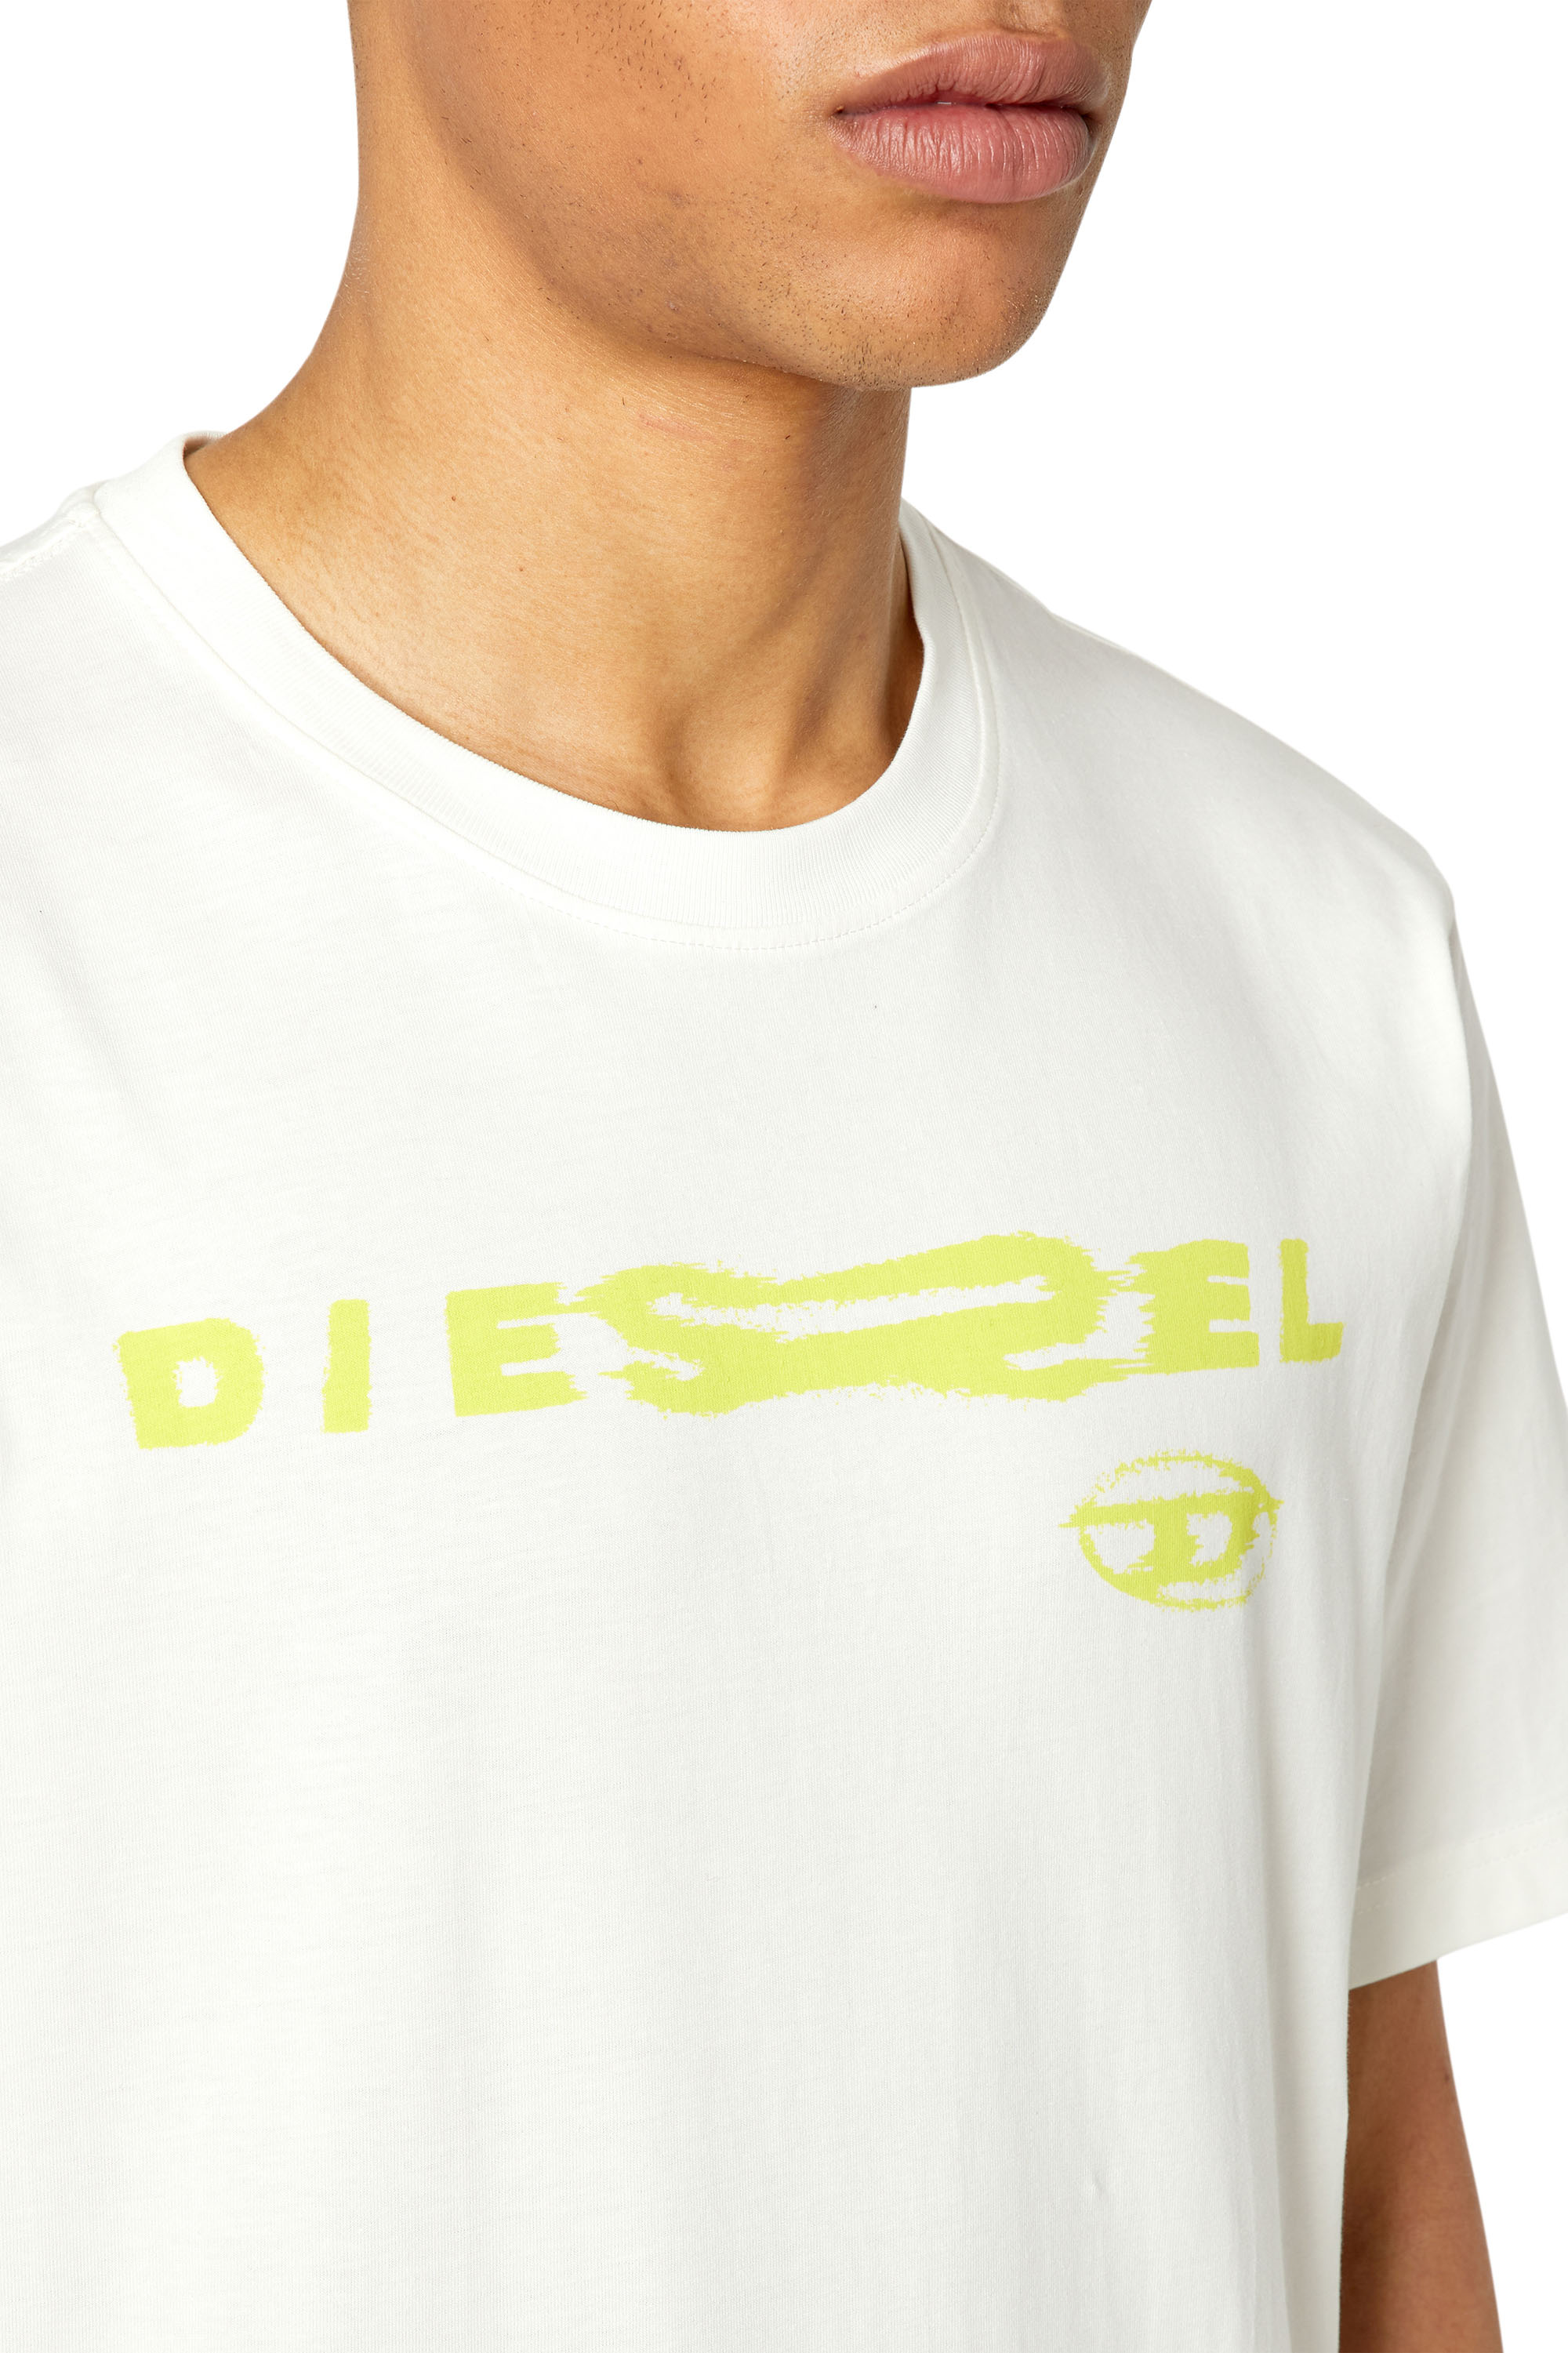 Diesel - T-JUST-G9, White - Image 5